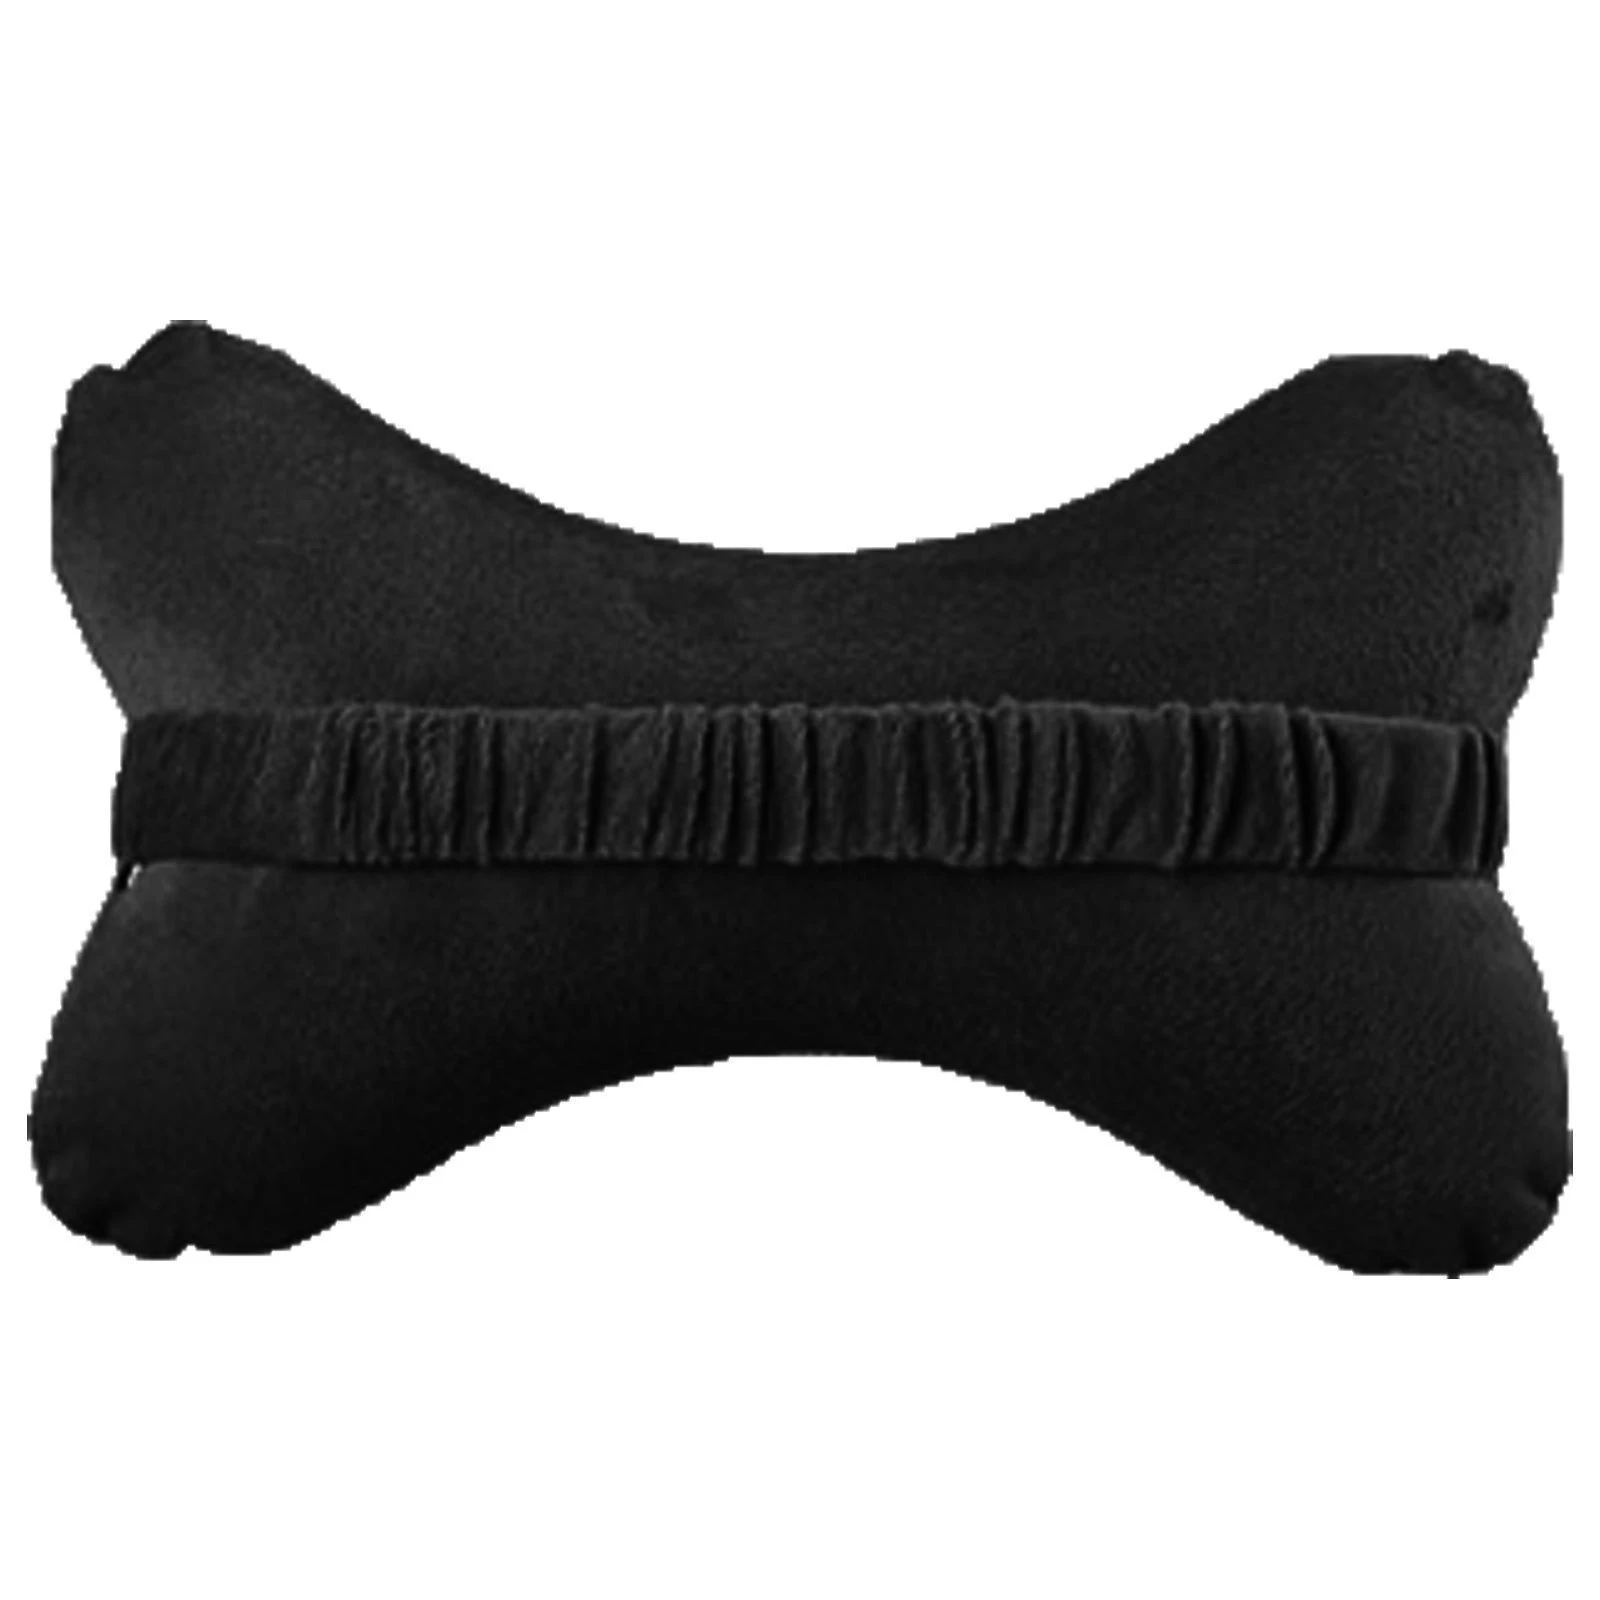 Bone Shaped Pillow | Memory Foam Travel Pillow | Car Seat Pillow | Inflatable Travel Pillow | Travel Cushion | Travel Neck Support